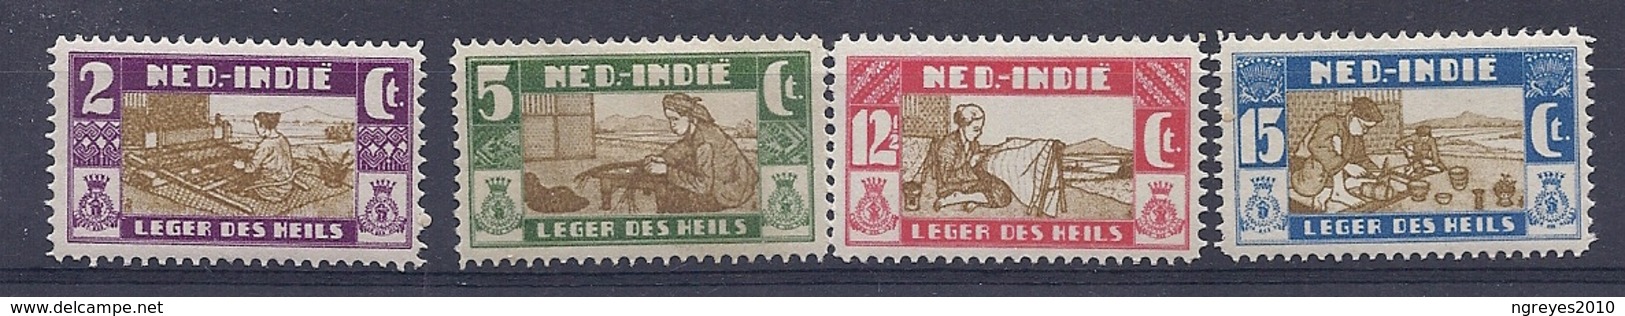 180030324  INDIA  HOLANDA  YVERT  Nº  165/8  MNH/MH - Netherlands Indies